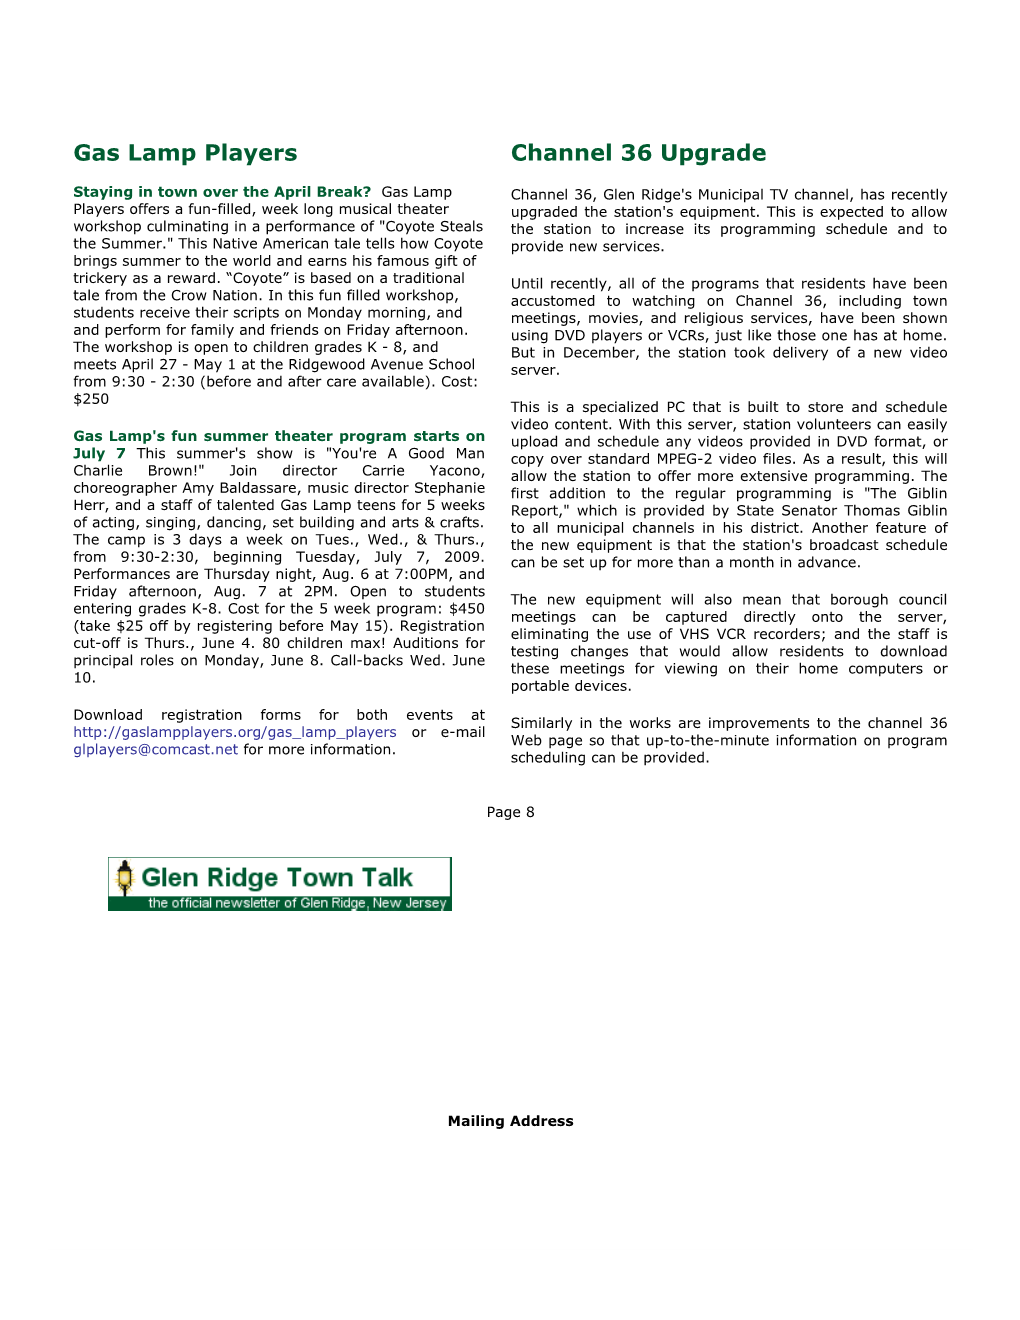 GR Newsletter Page 8 s1